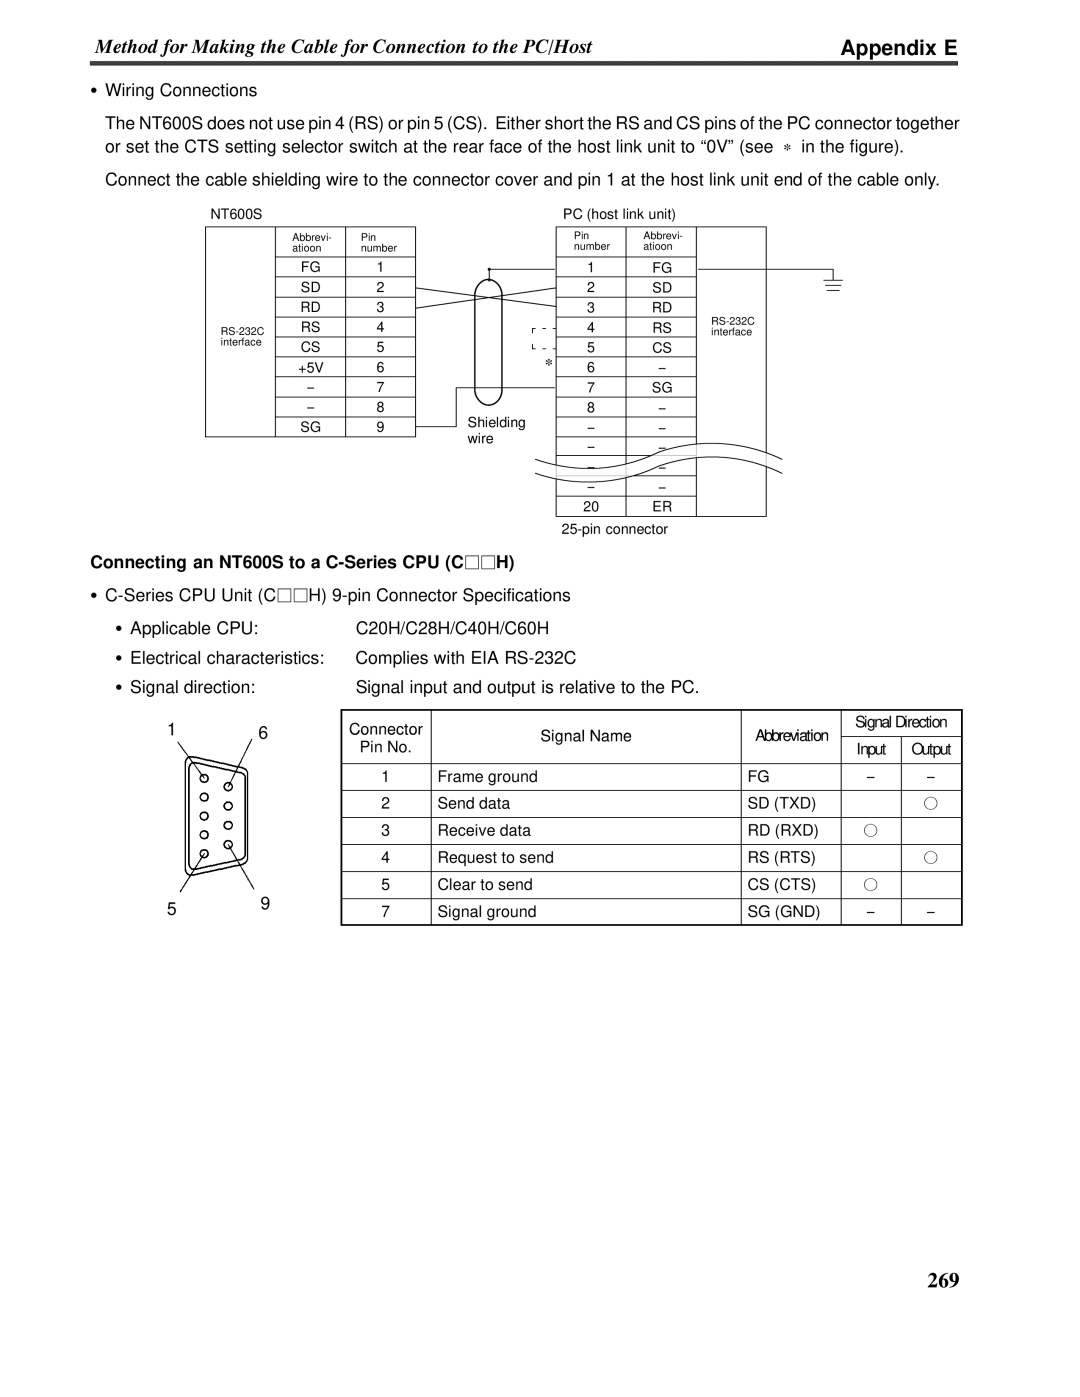 Omron V022-E3-1 operation manual Appendix E, Wiring Connections 